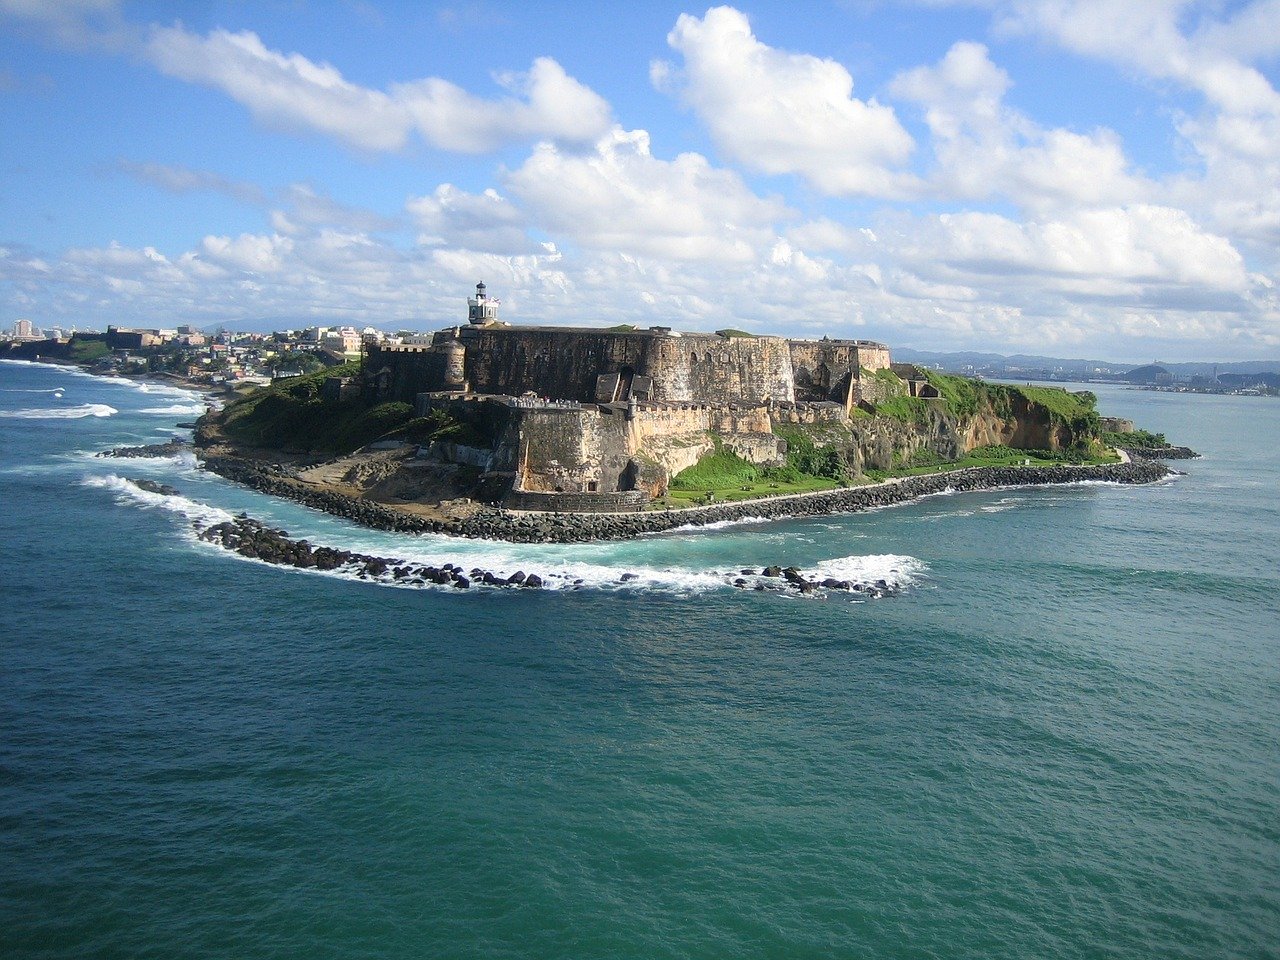 US House passes bill to determine Puerto Rico statehood status